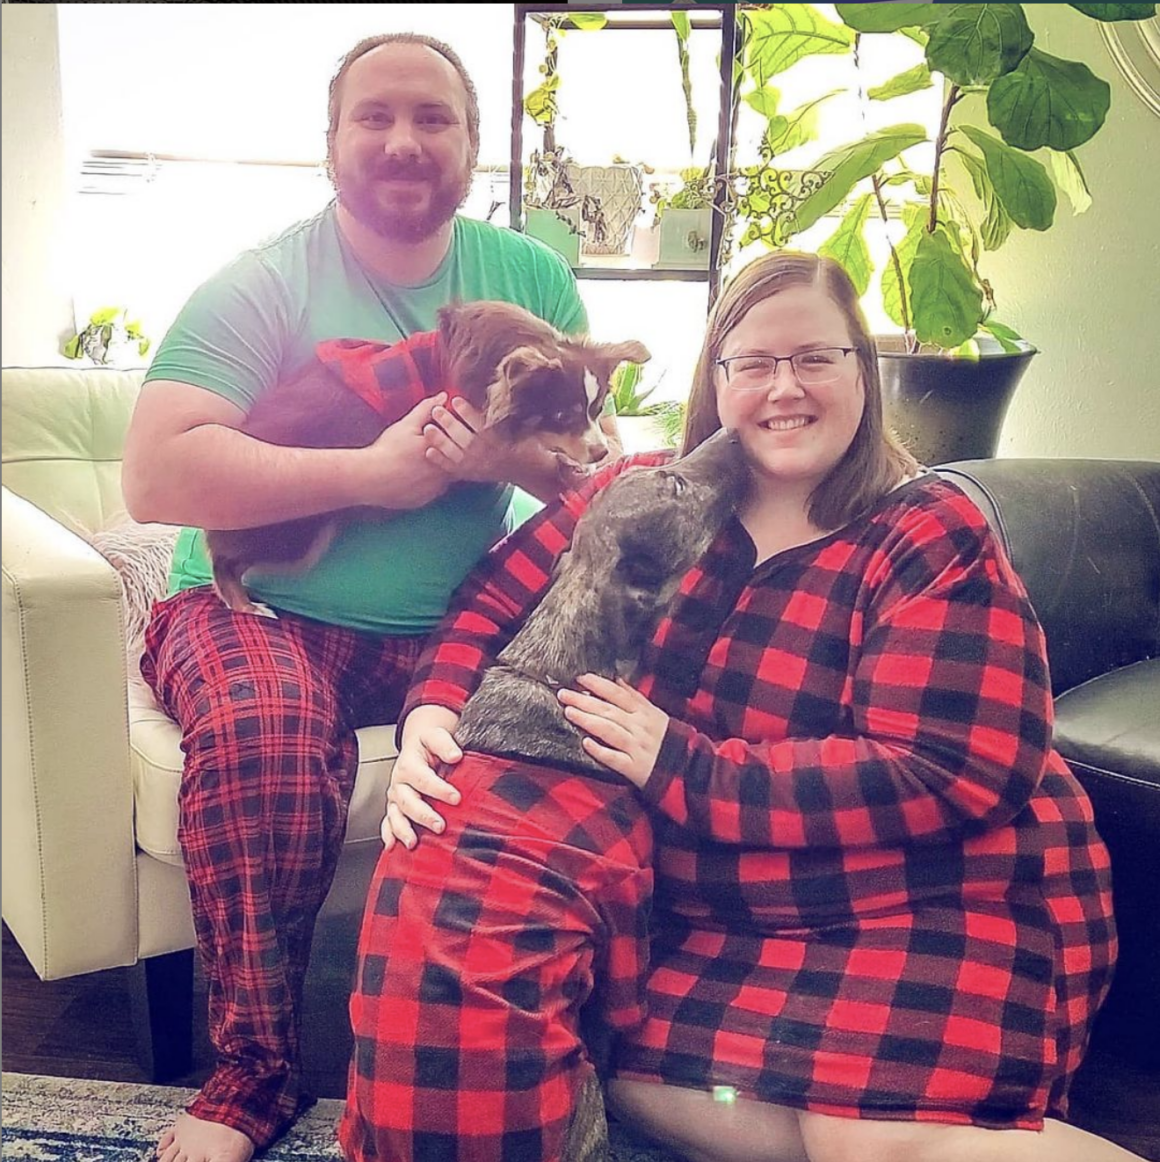 Unique Yeti Christmas Pajamas For A Family Green - Family